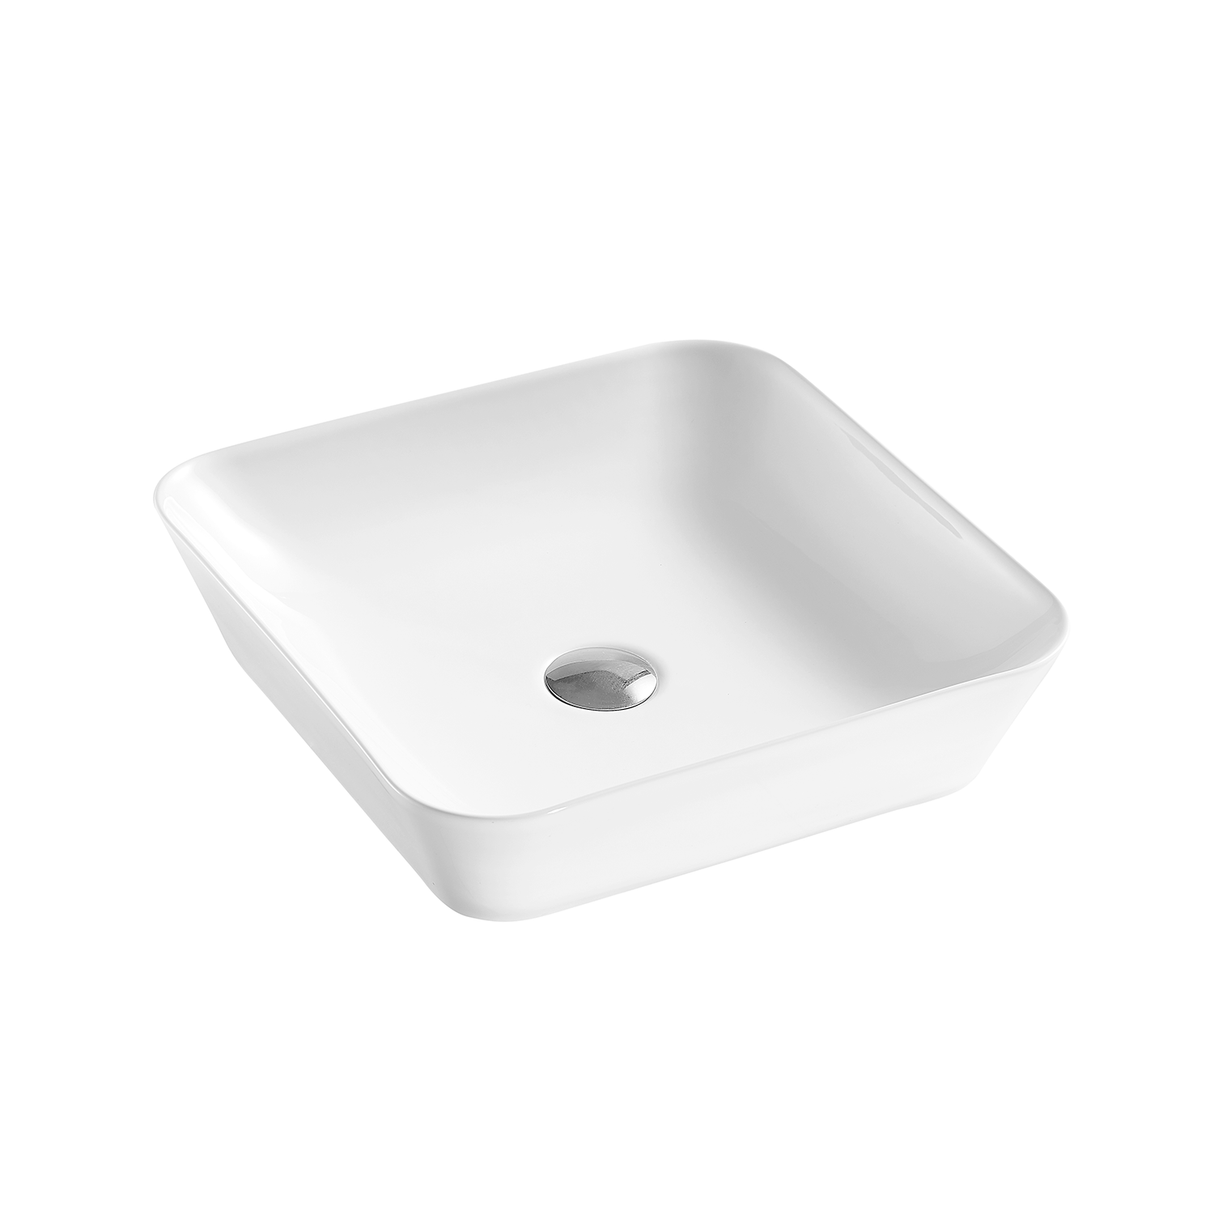 DAX Ceramic Square Bathroom Vessel Basin, Black Matte DAX-CL1468-BM